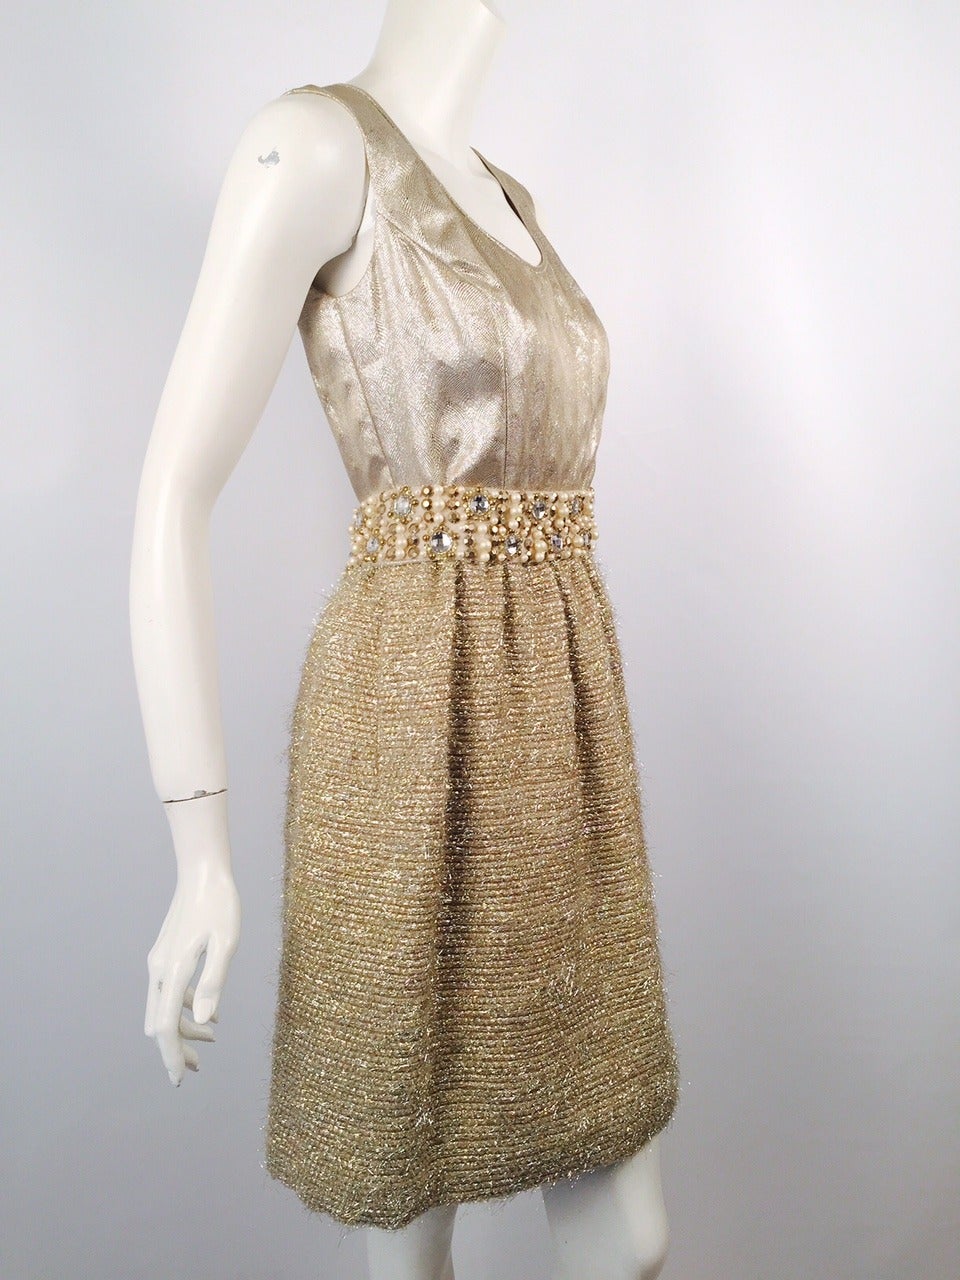 New Fiandaca Sleeveless Metallic Dress is an ode to classic style and 